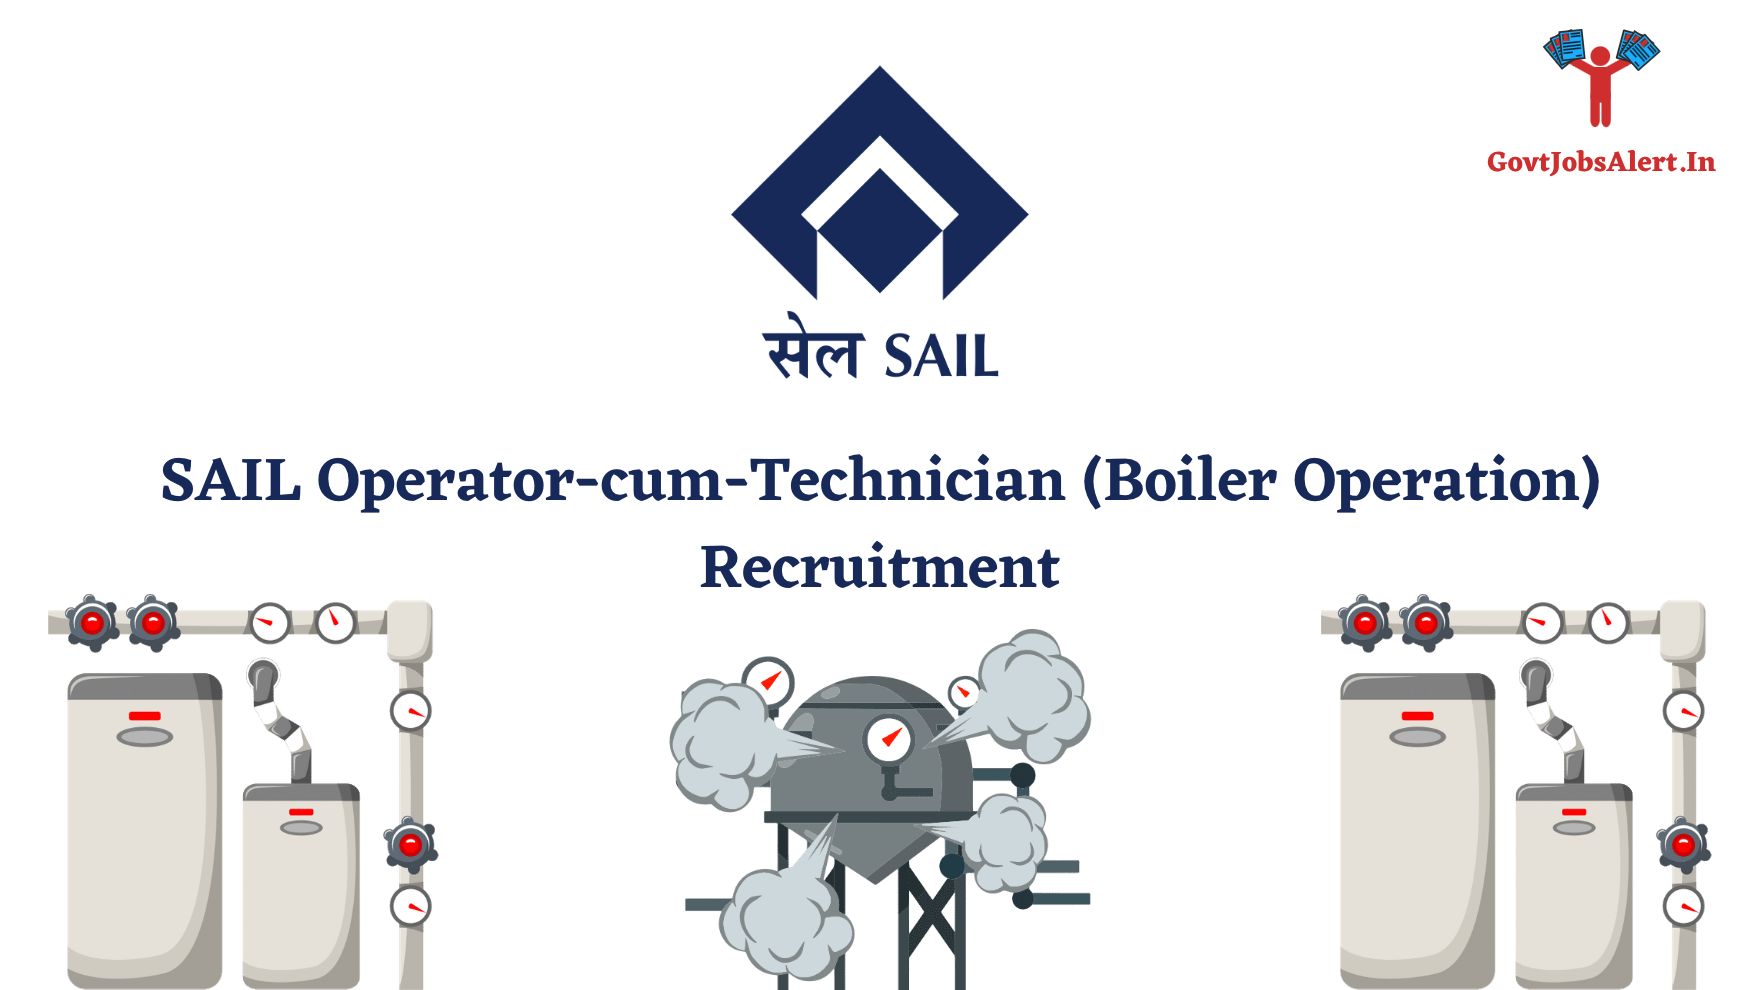 SAIL Operator-cum-Technician (Boiler Operation) Recruitment